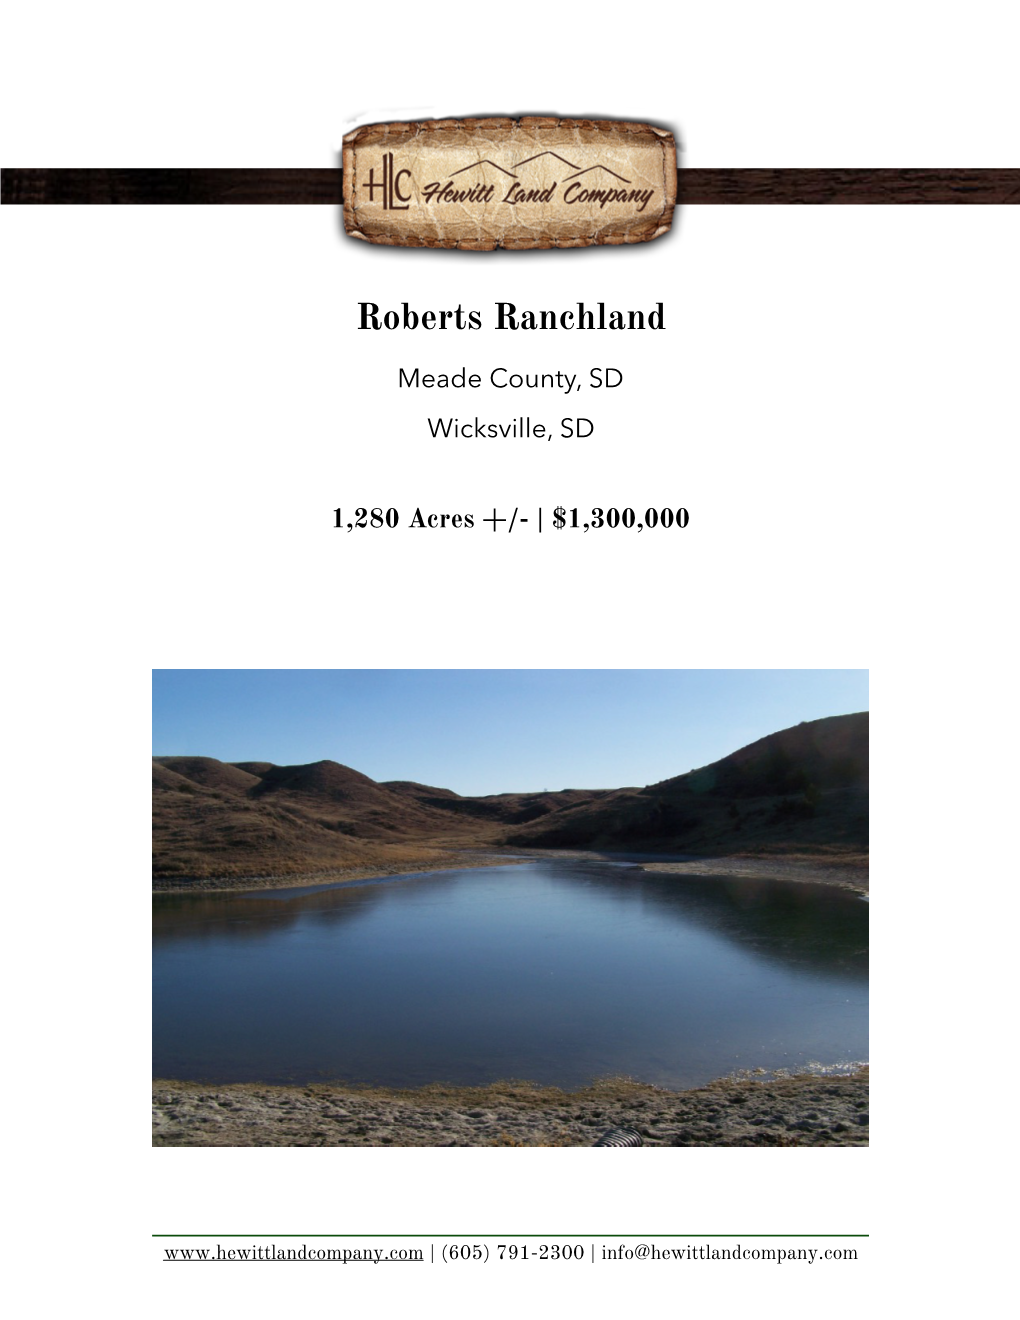 Roberts Ranchland Brochure